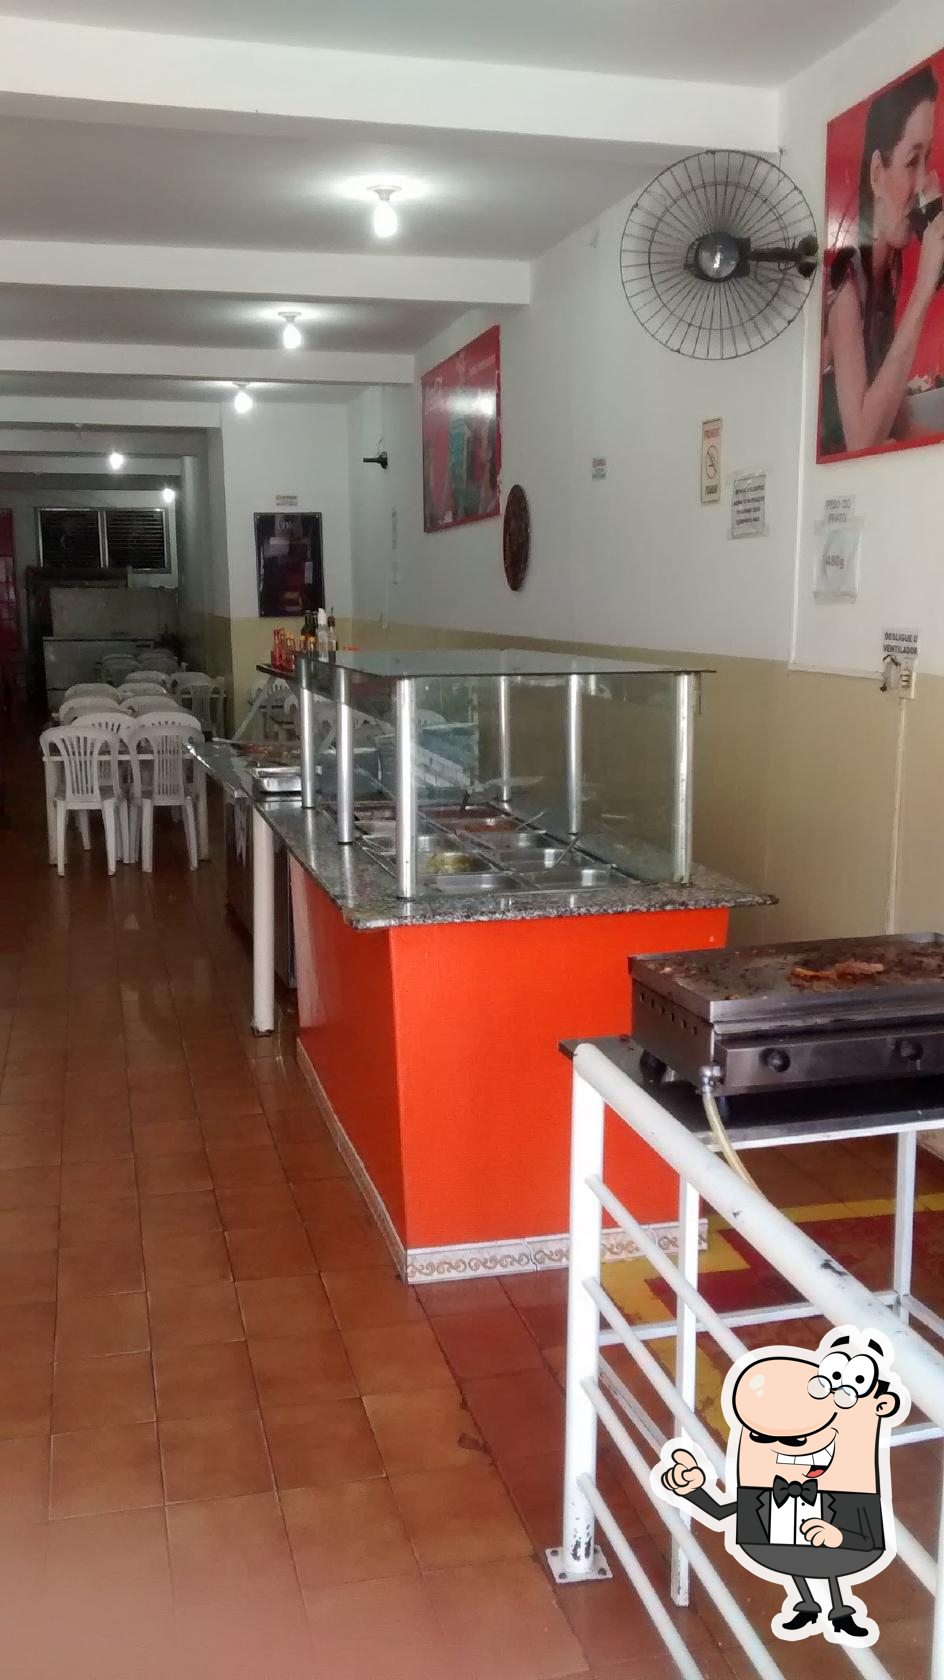 Restaurante Espeto de Ouro - Montes Claros, MG